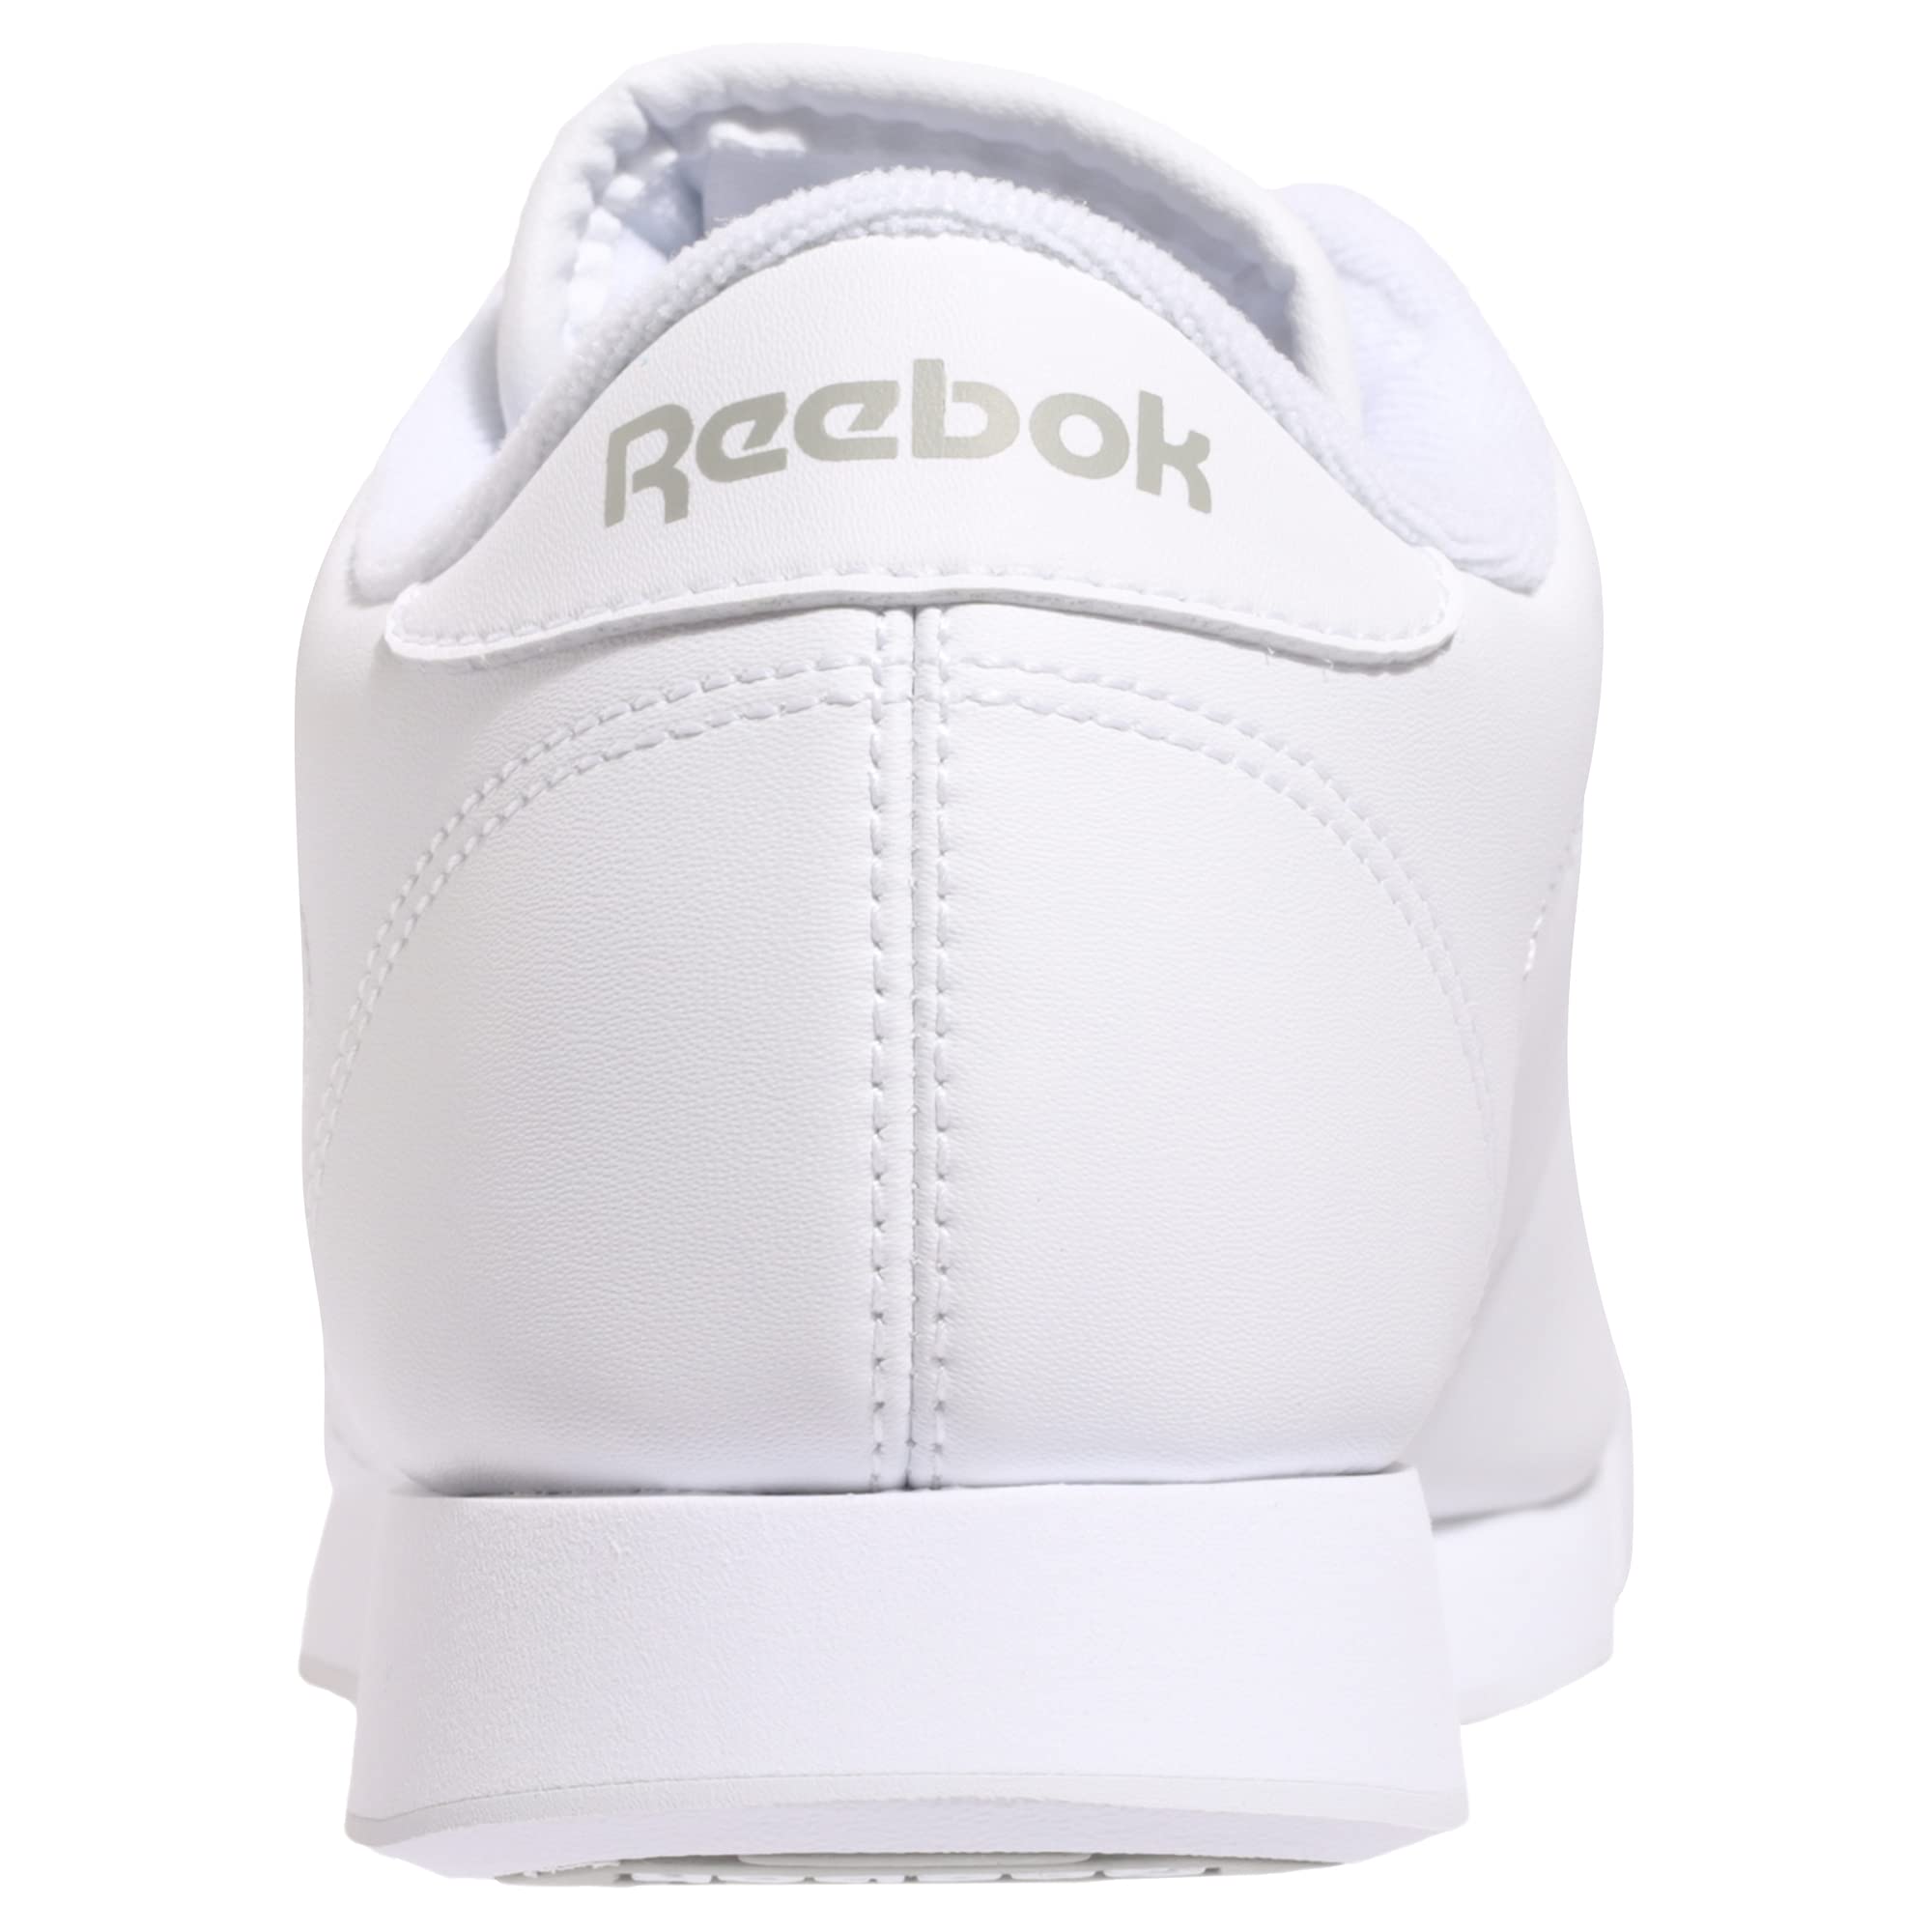 Reebok Women's Princess Sneaker